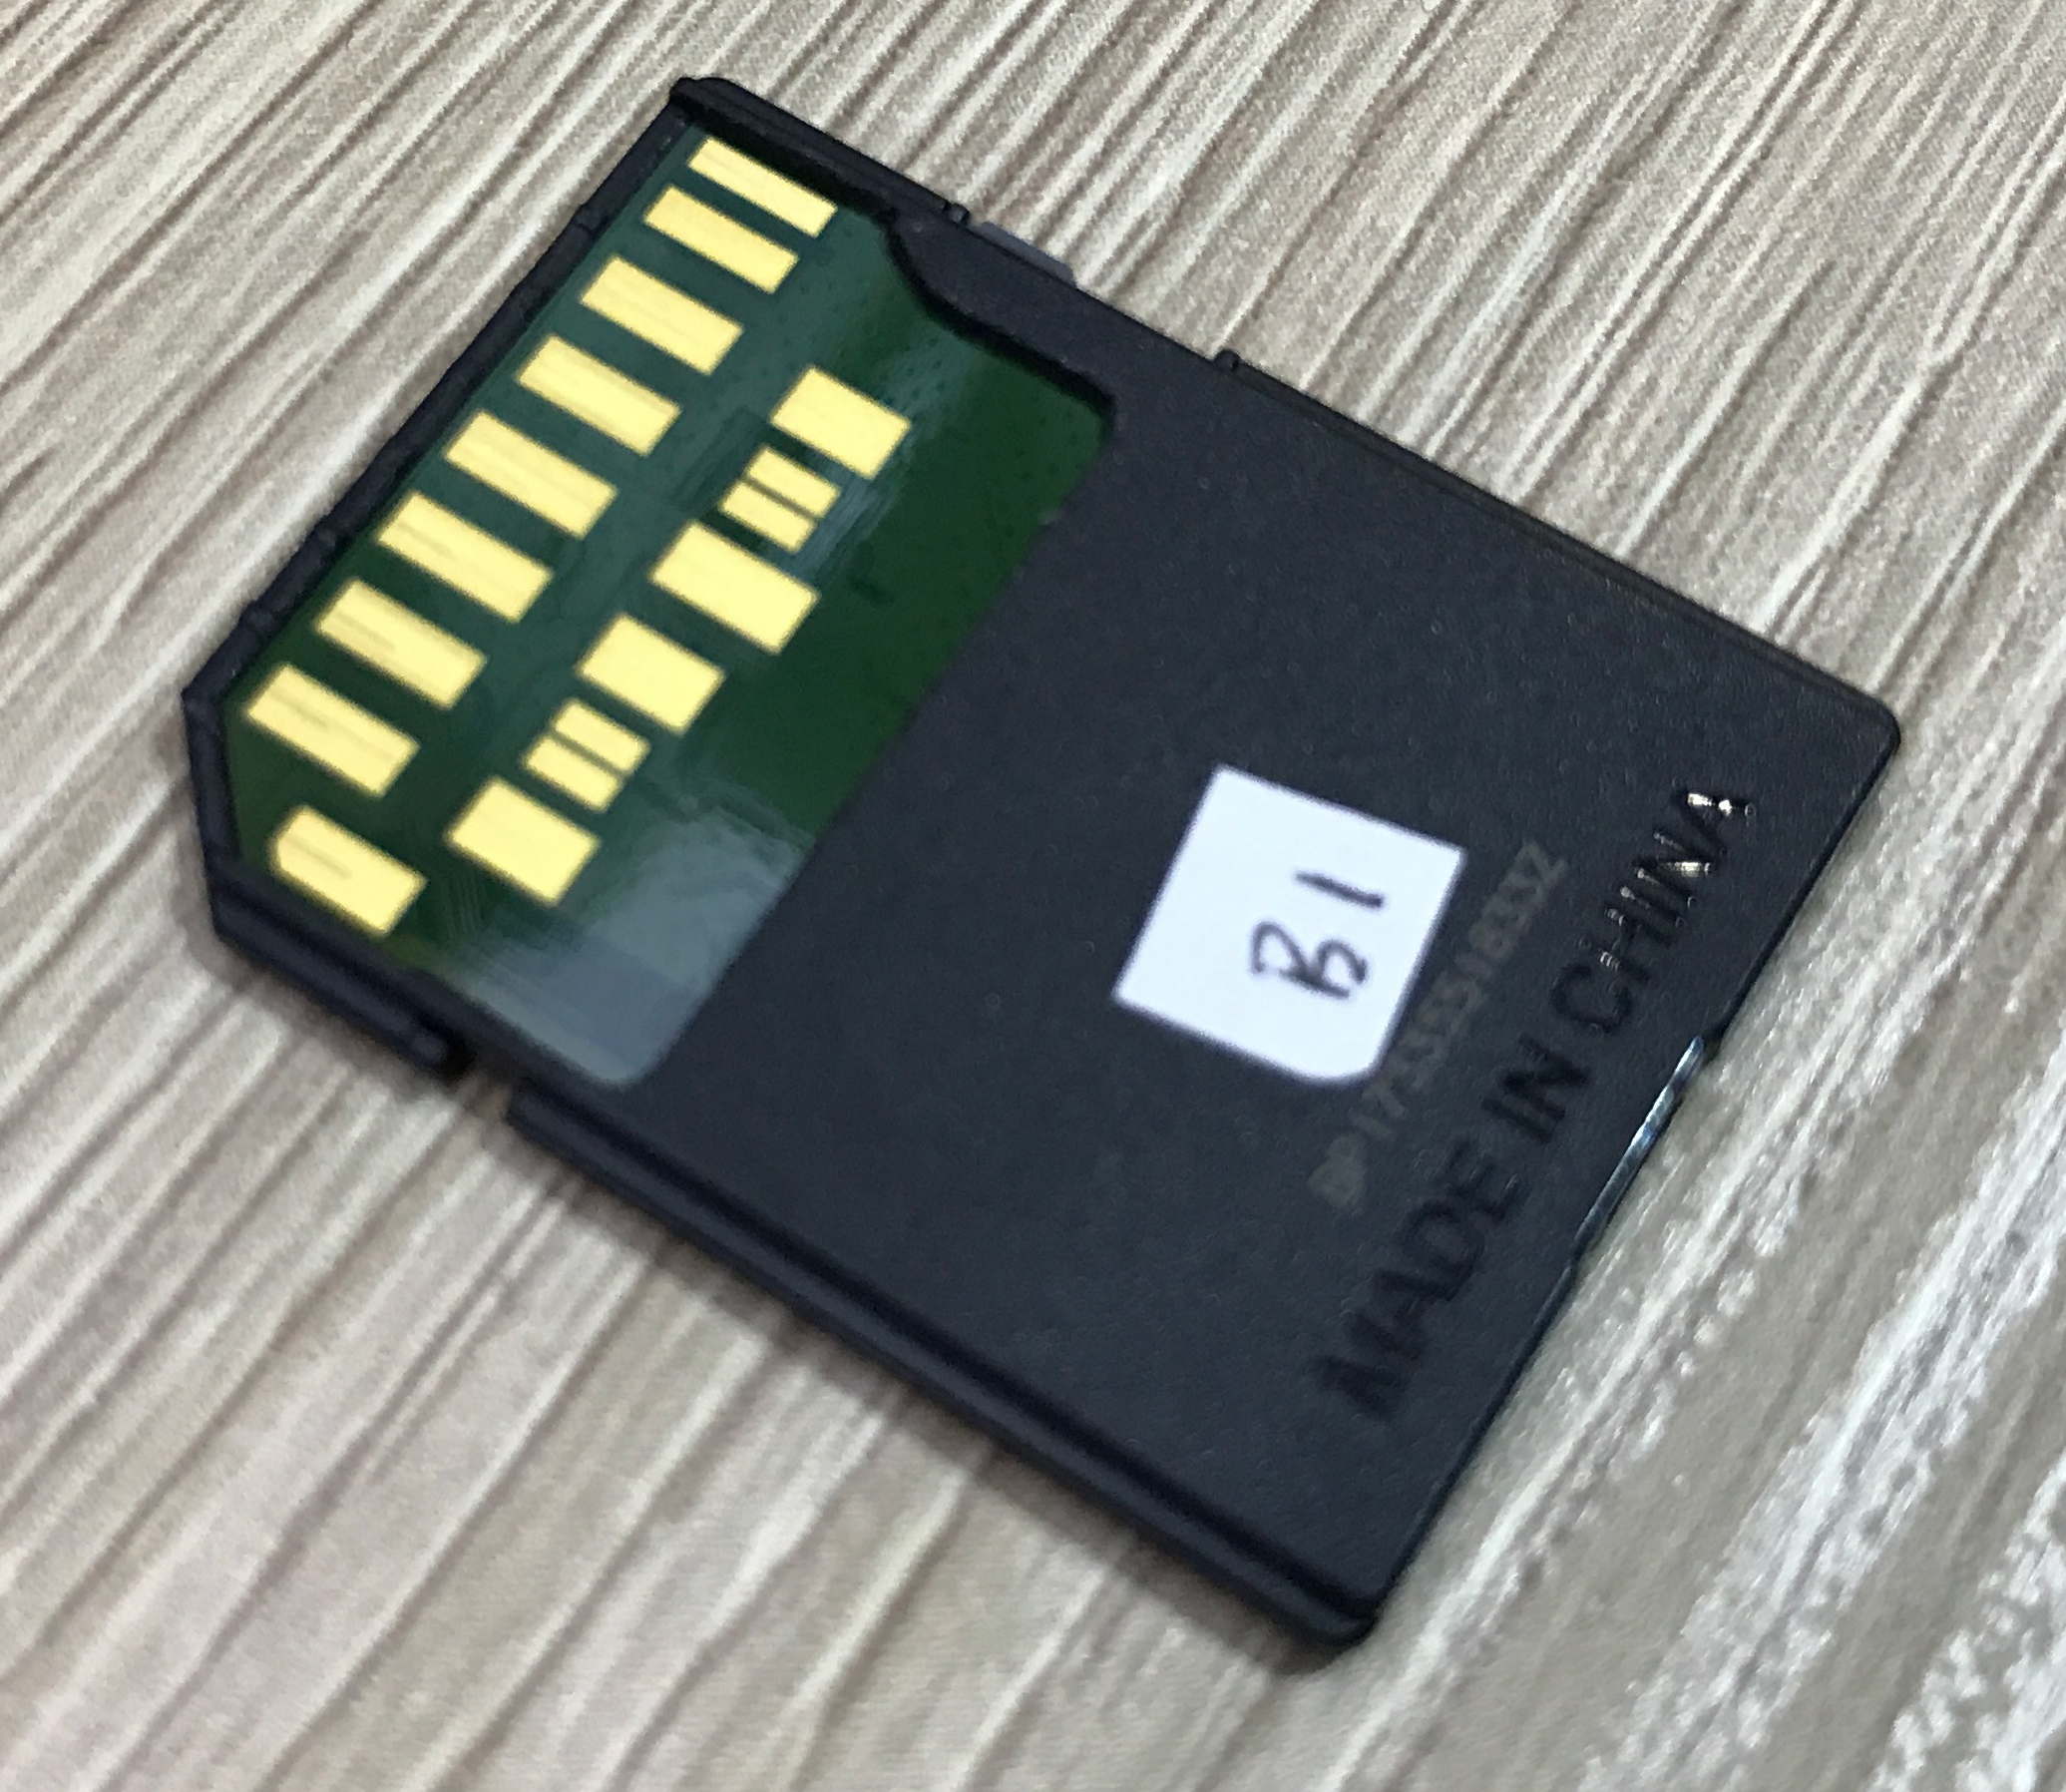 Uhs 3 память. SD карта Western Digital. Чипы памяти карт SD. PCI to SD. UHS-III.